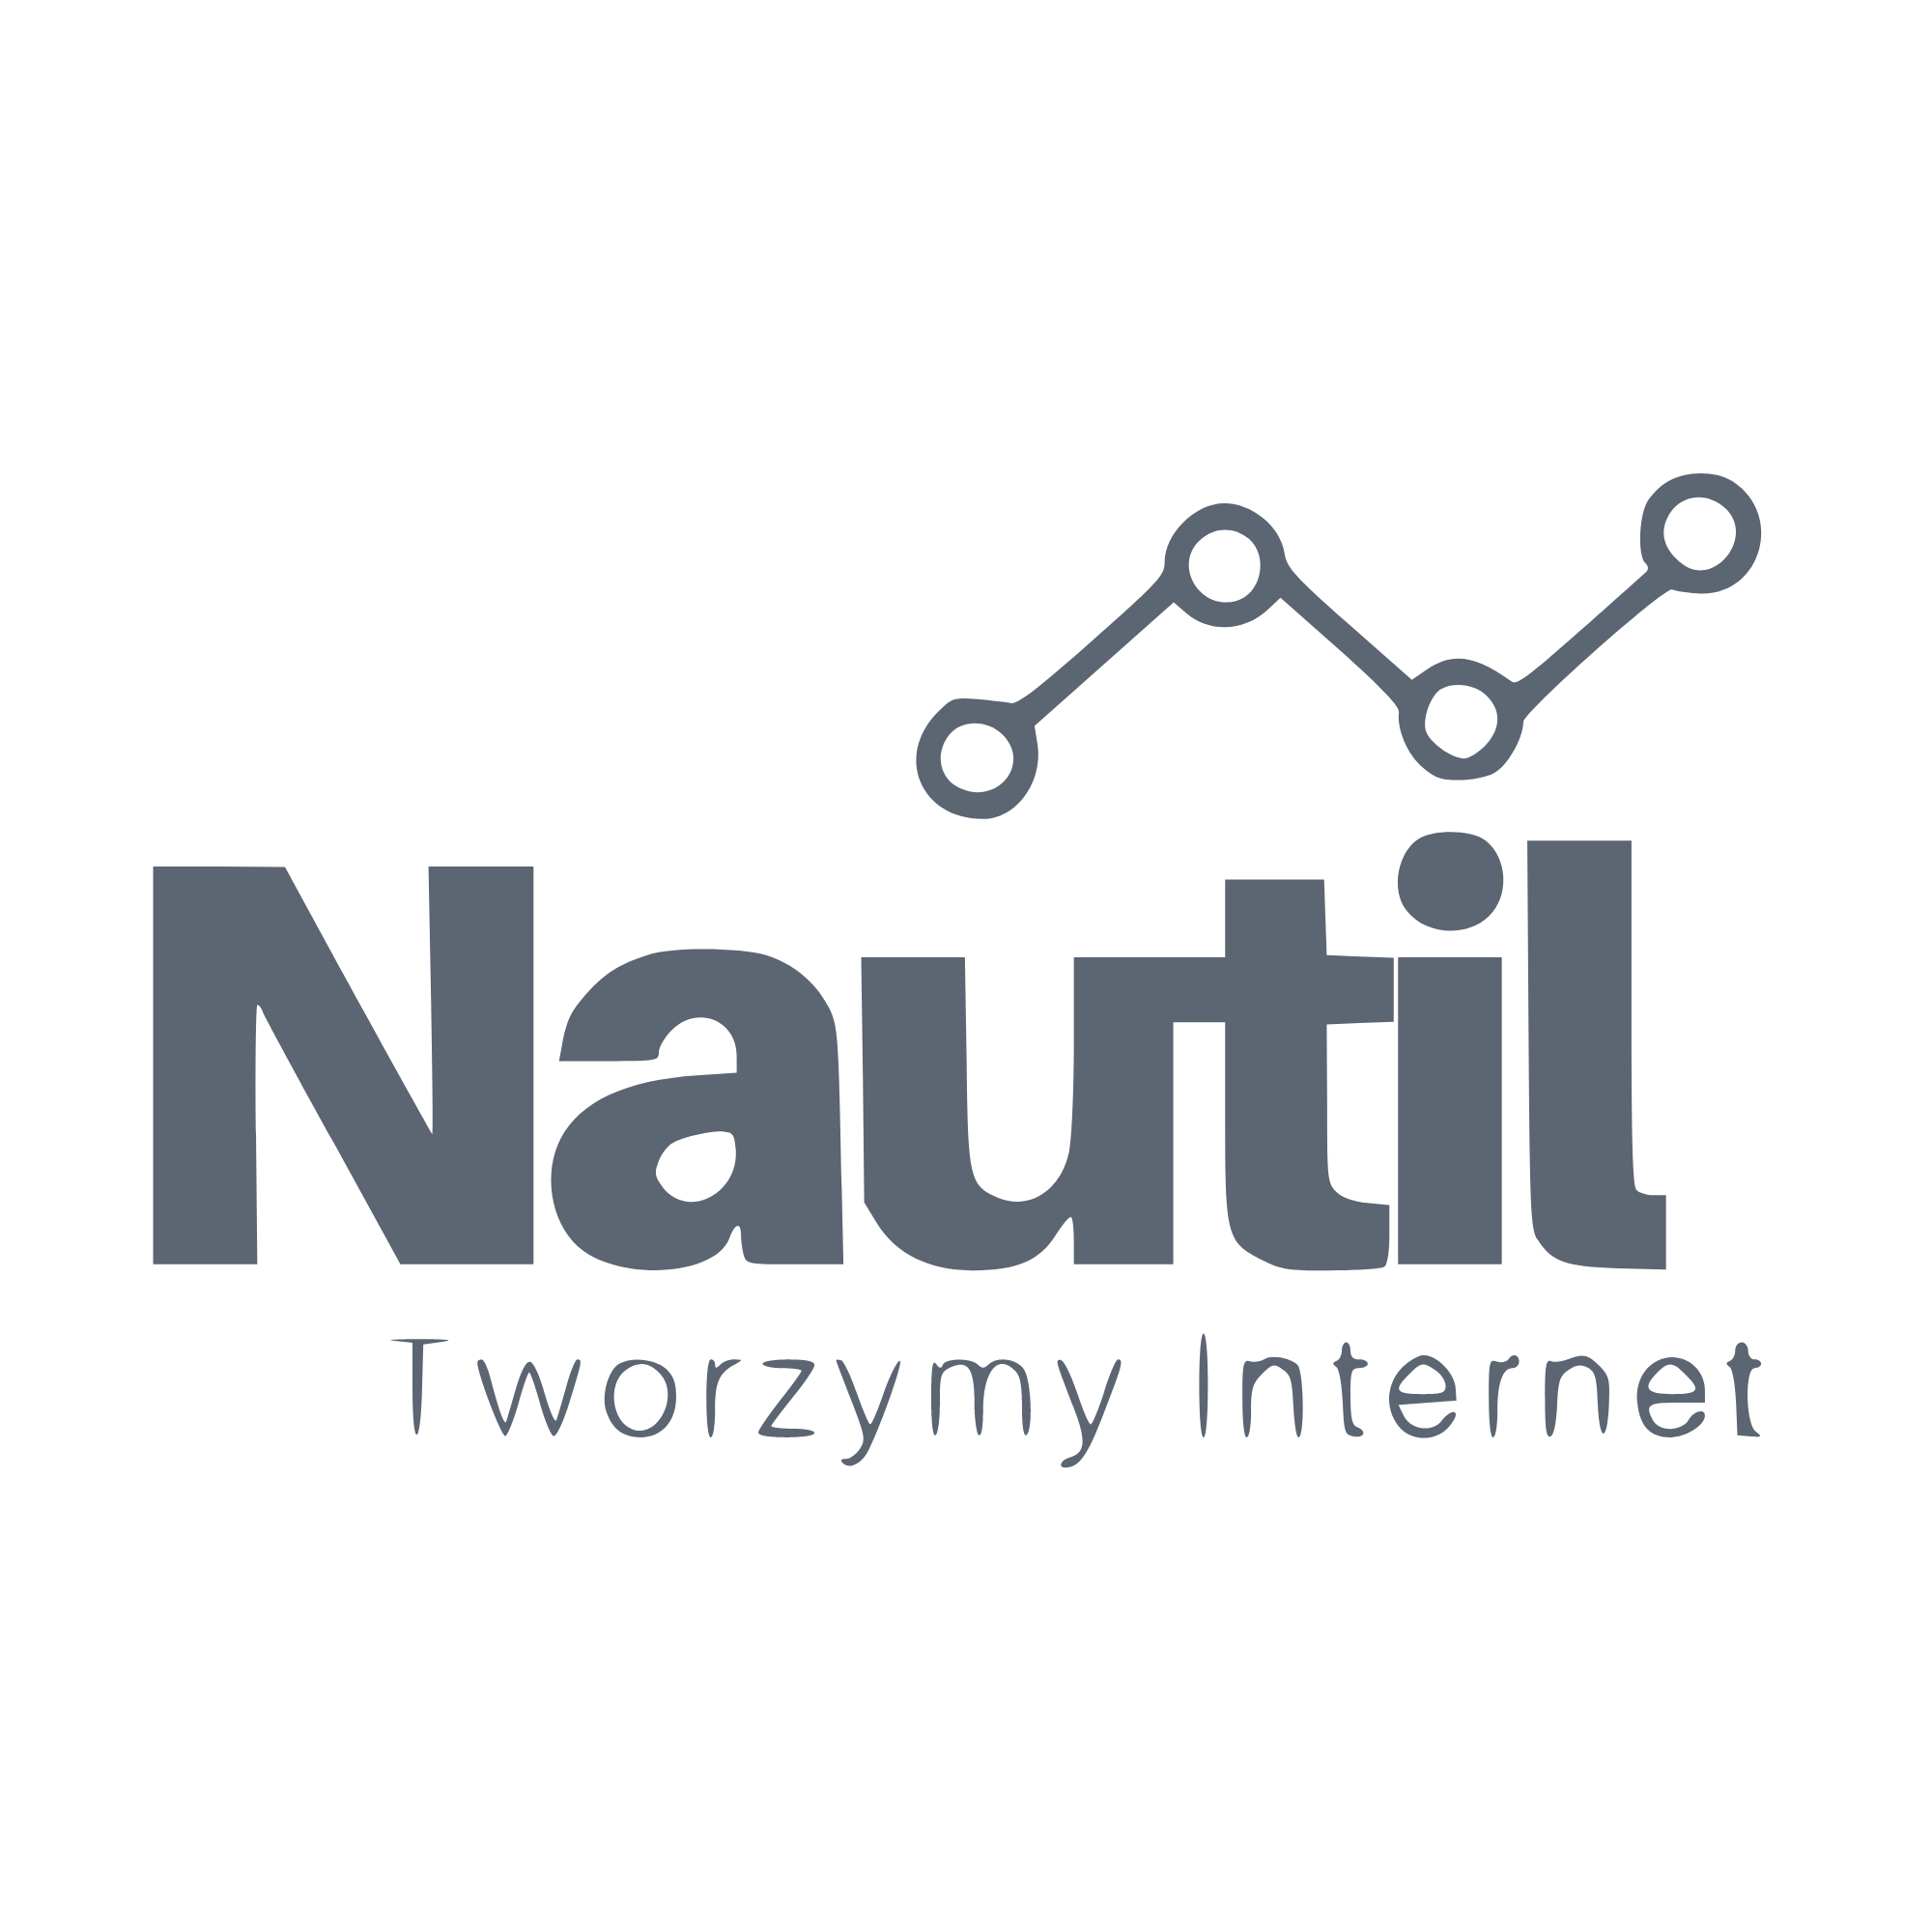 tailus logo